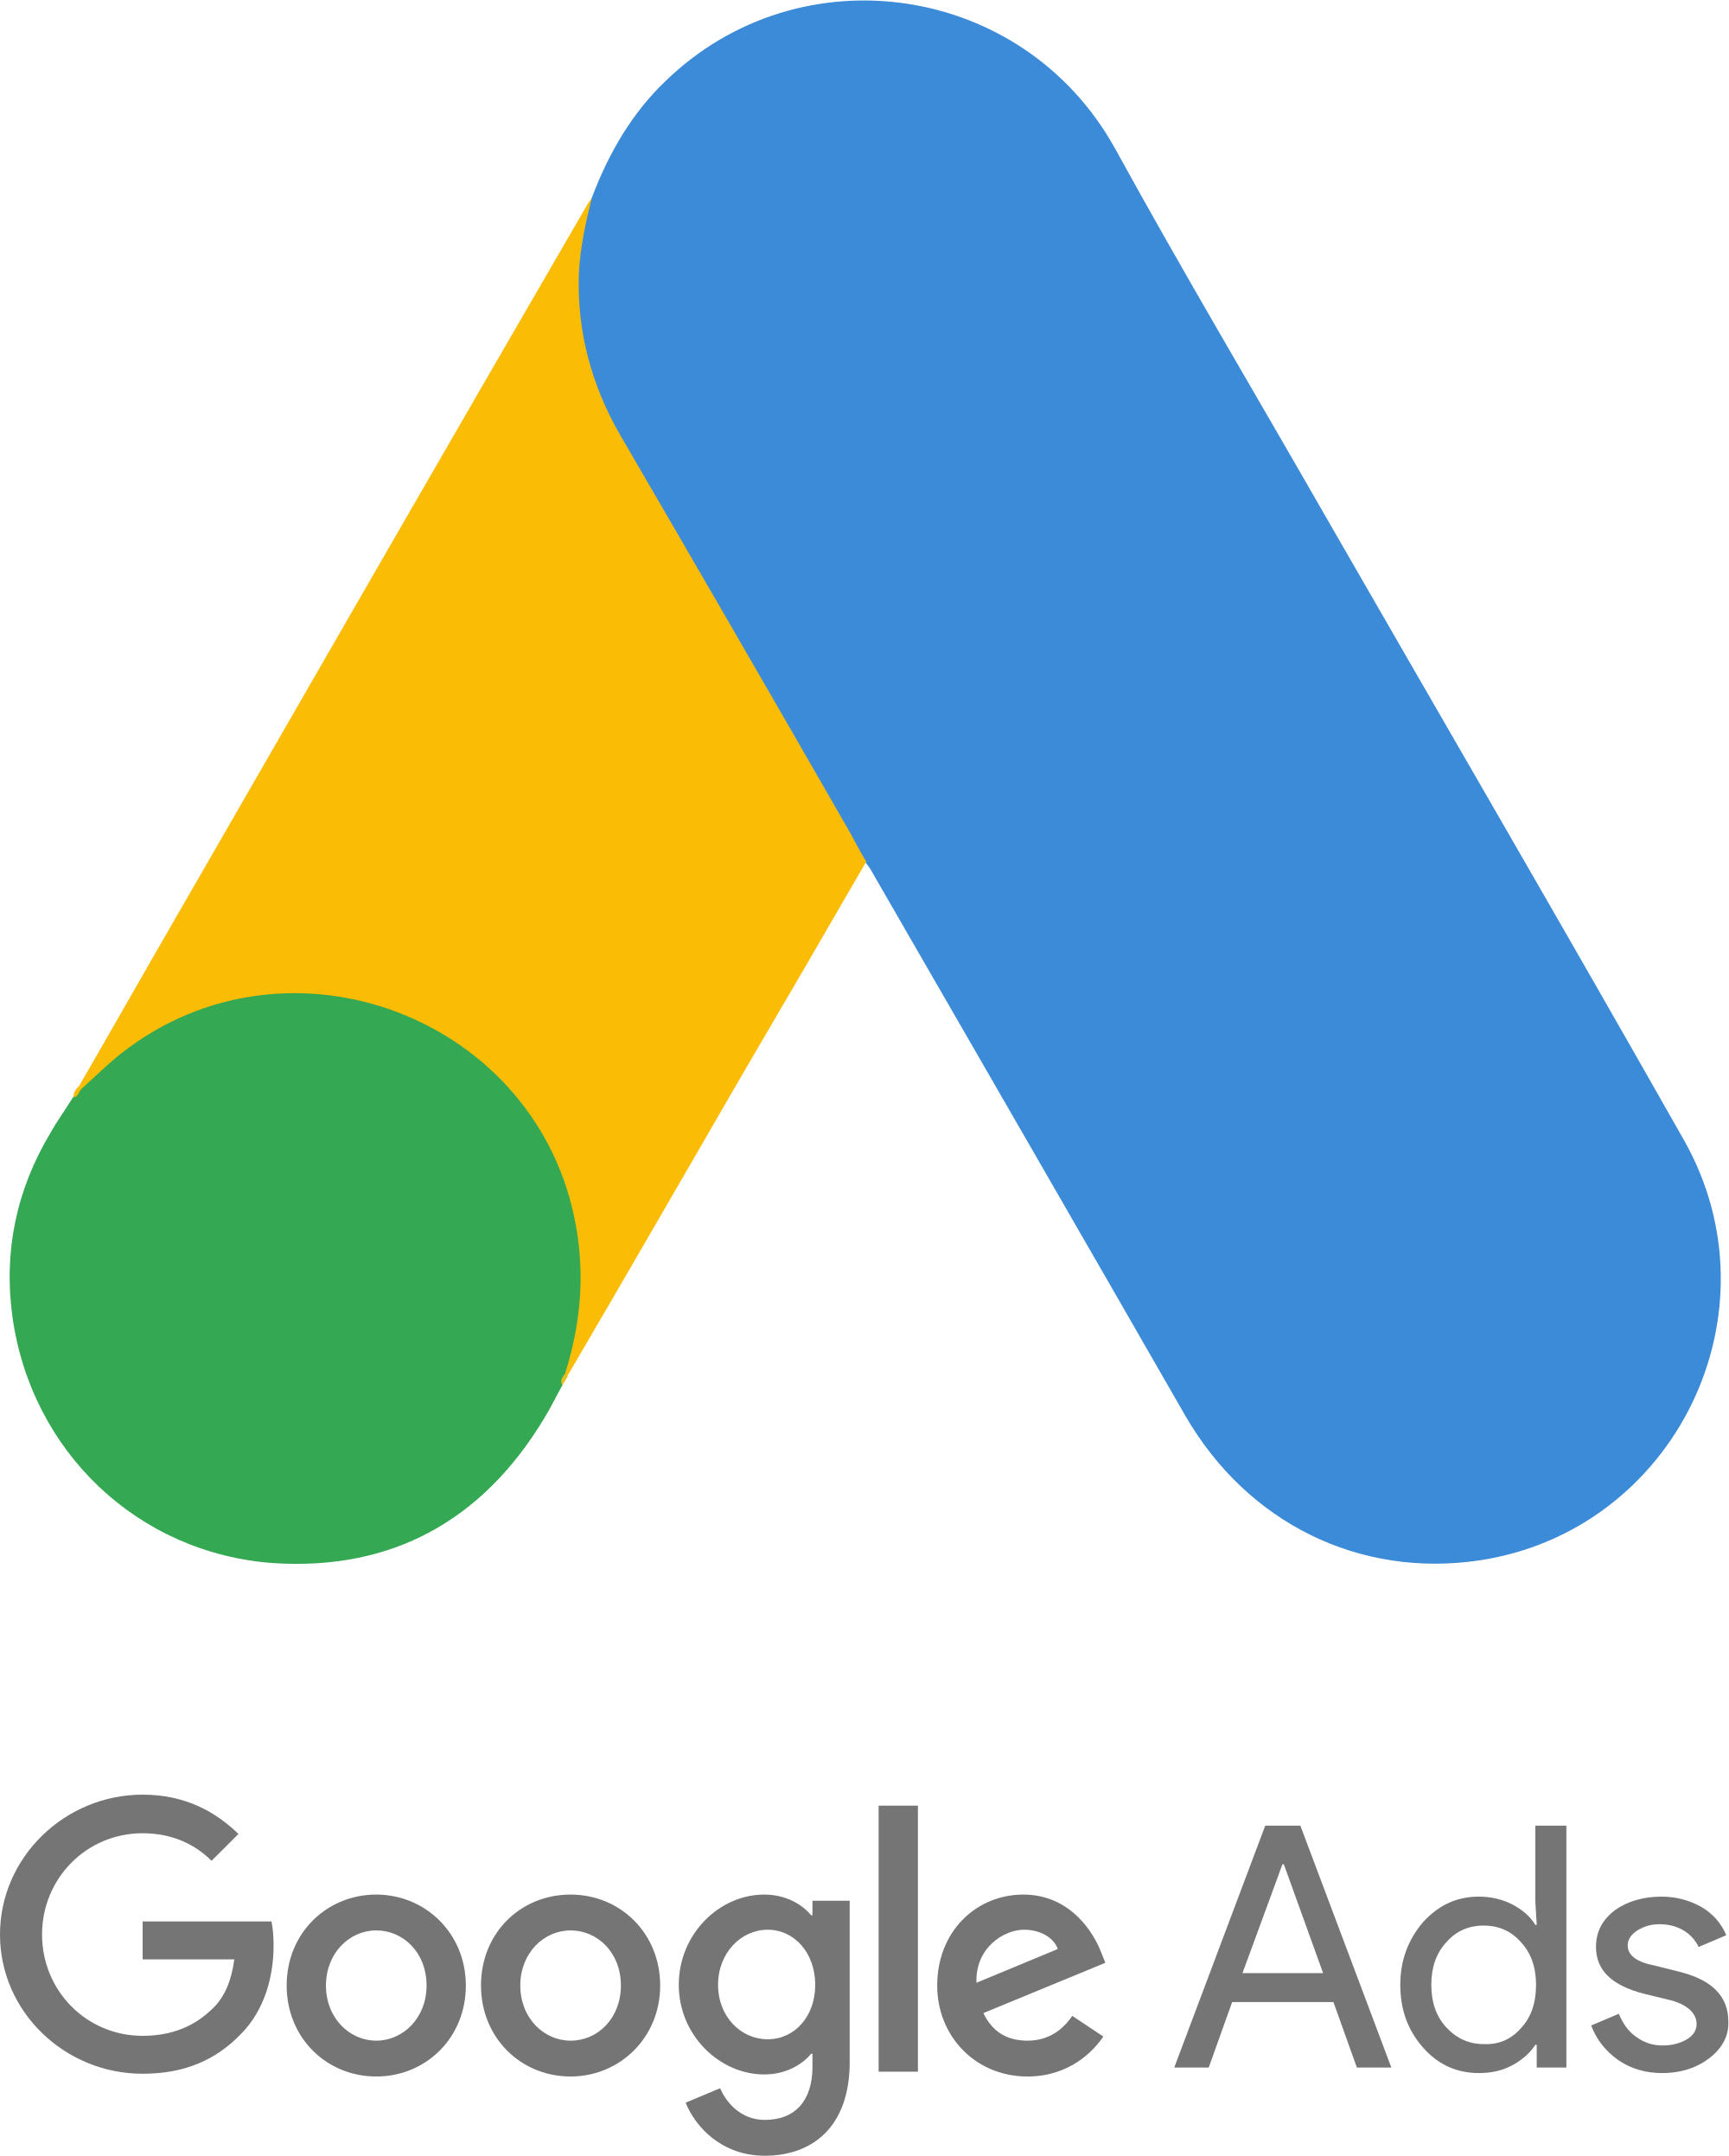 Google AdWords Logo - File:Google Ads logo.svg - Wikimedia Commons